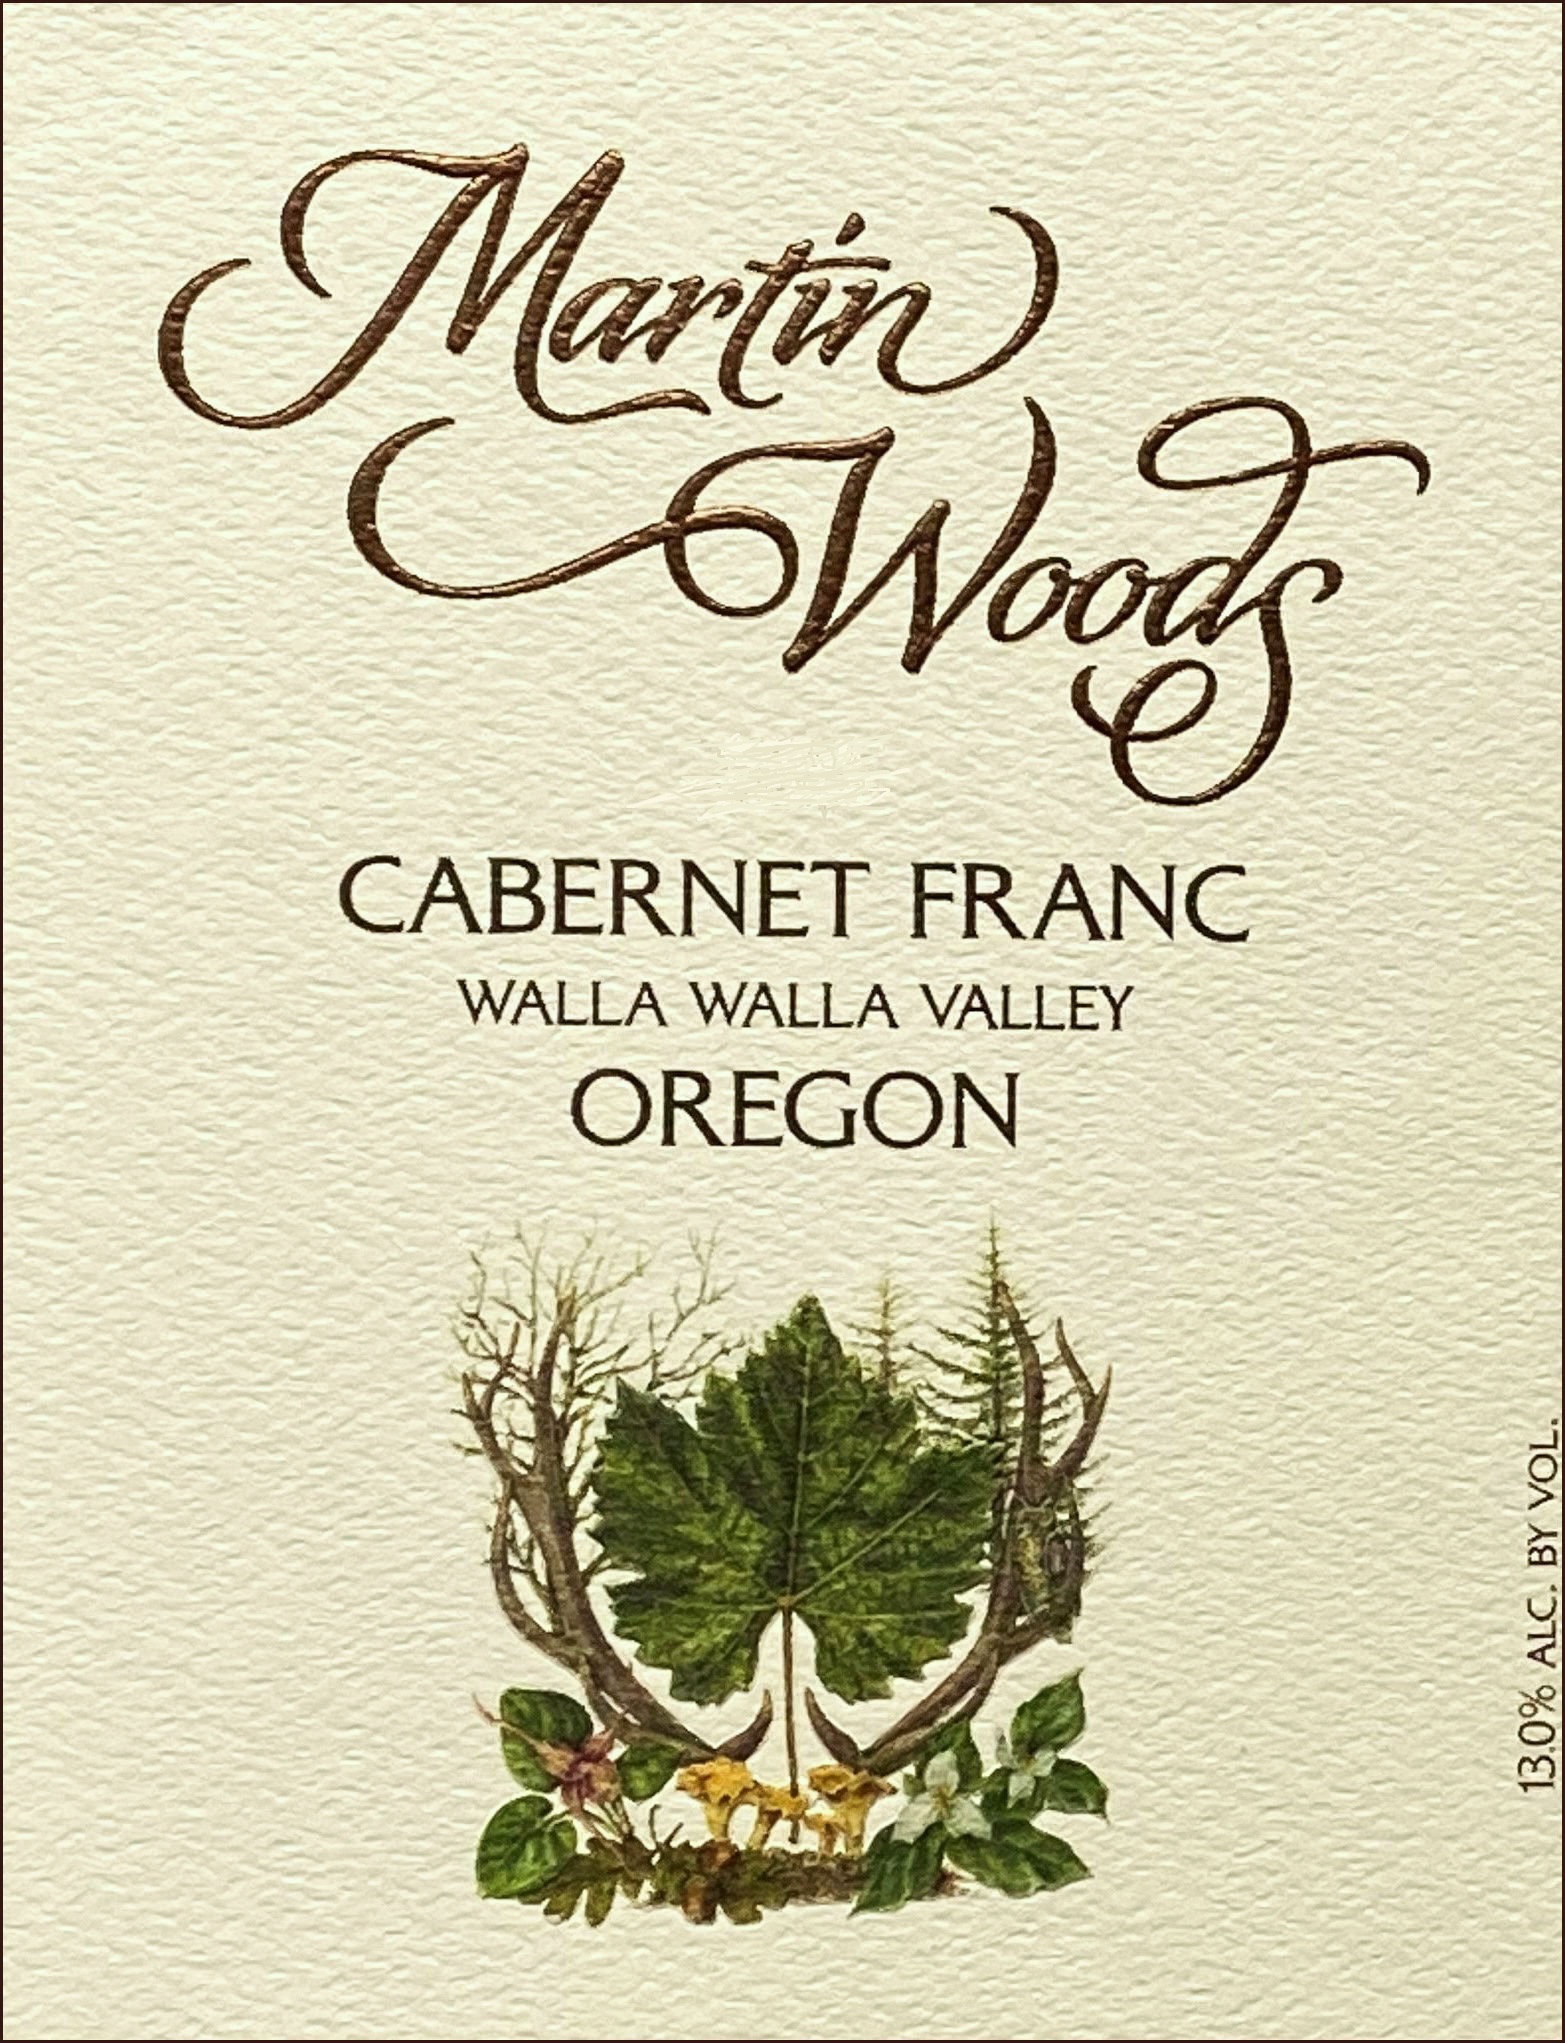 2017 Martin Woods Cabernet Franc Walla Walla Valley image